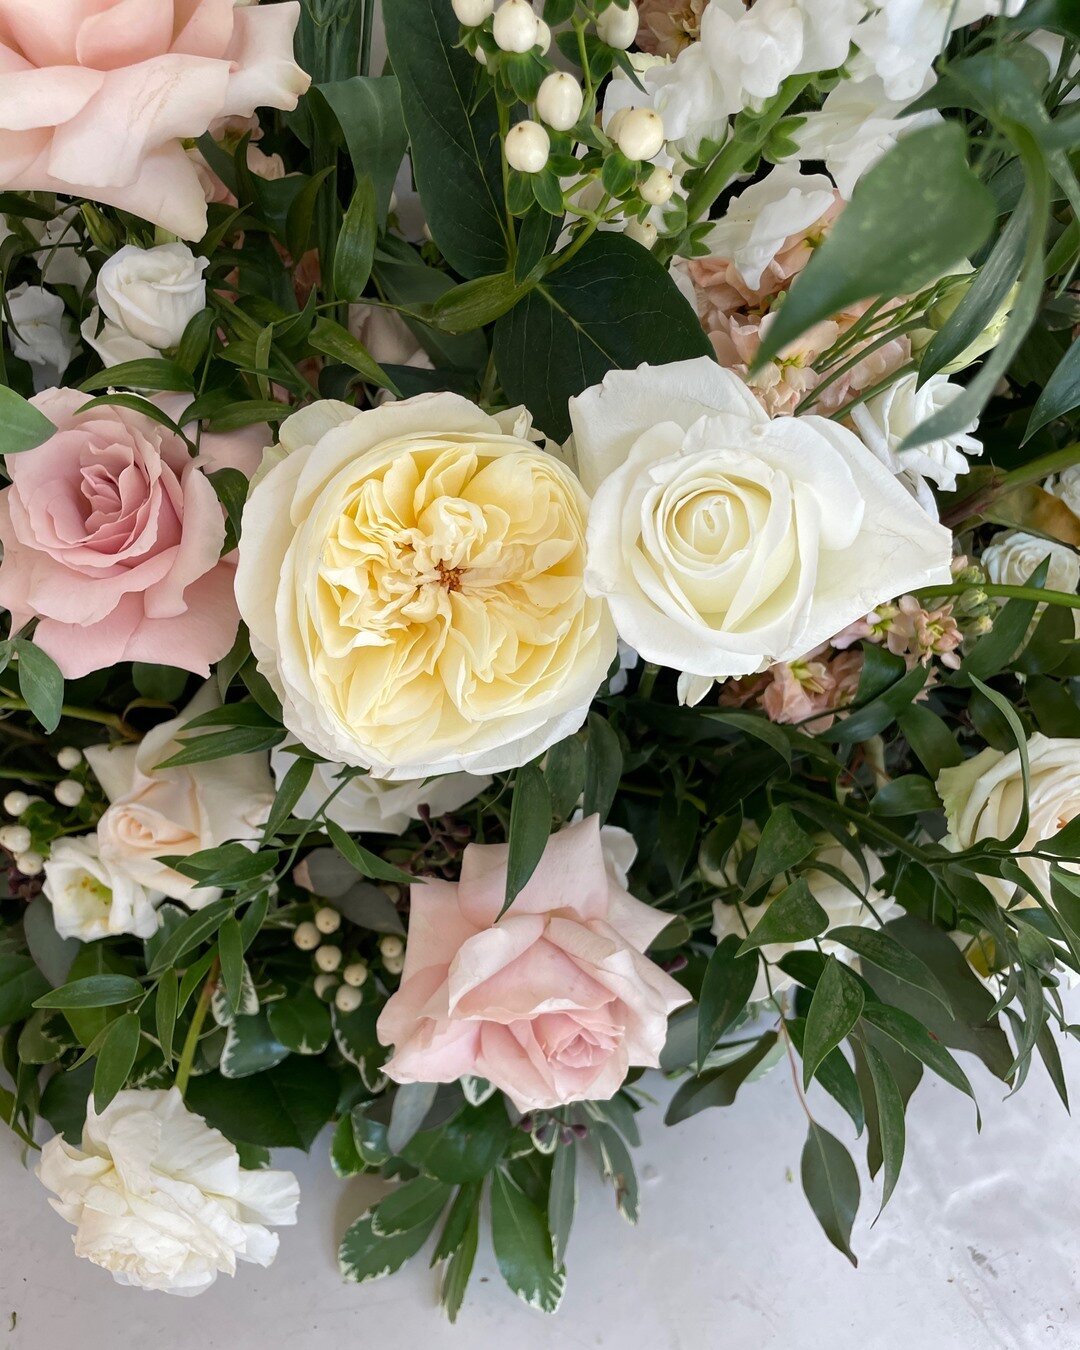 Love this soft color palette!  #flowerpower#flowerlovers #flowermagic #wedding #flowers #weddingflowers #callmarigold #dontwaitocelebrate #marigoldwedding